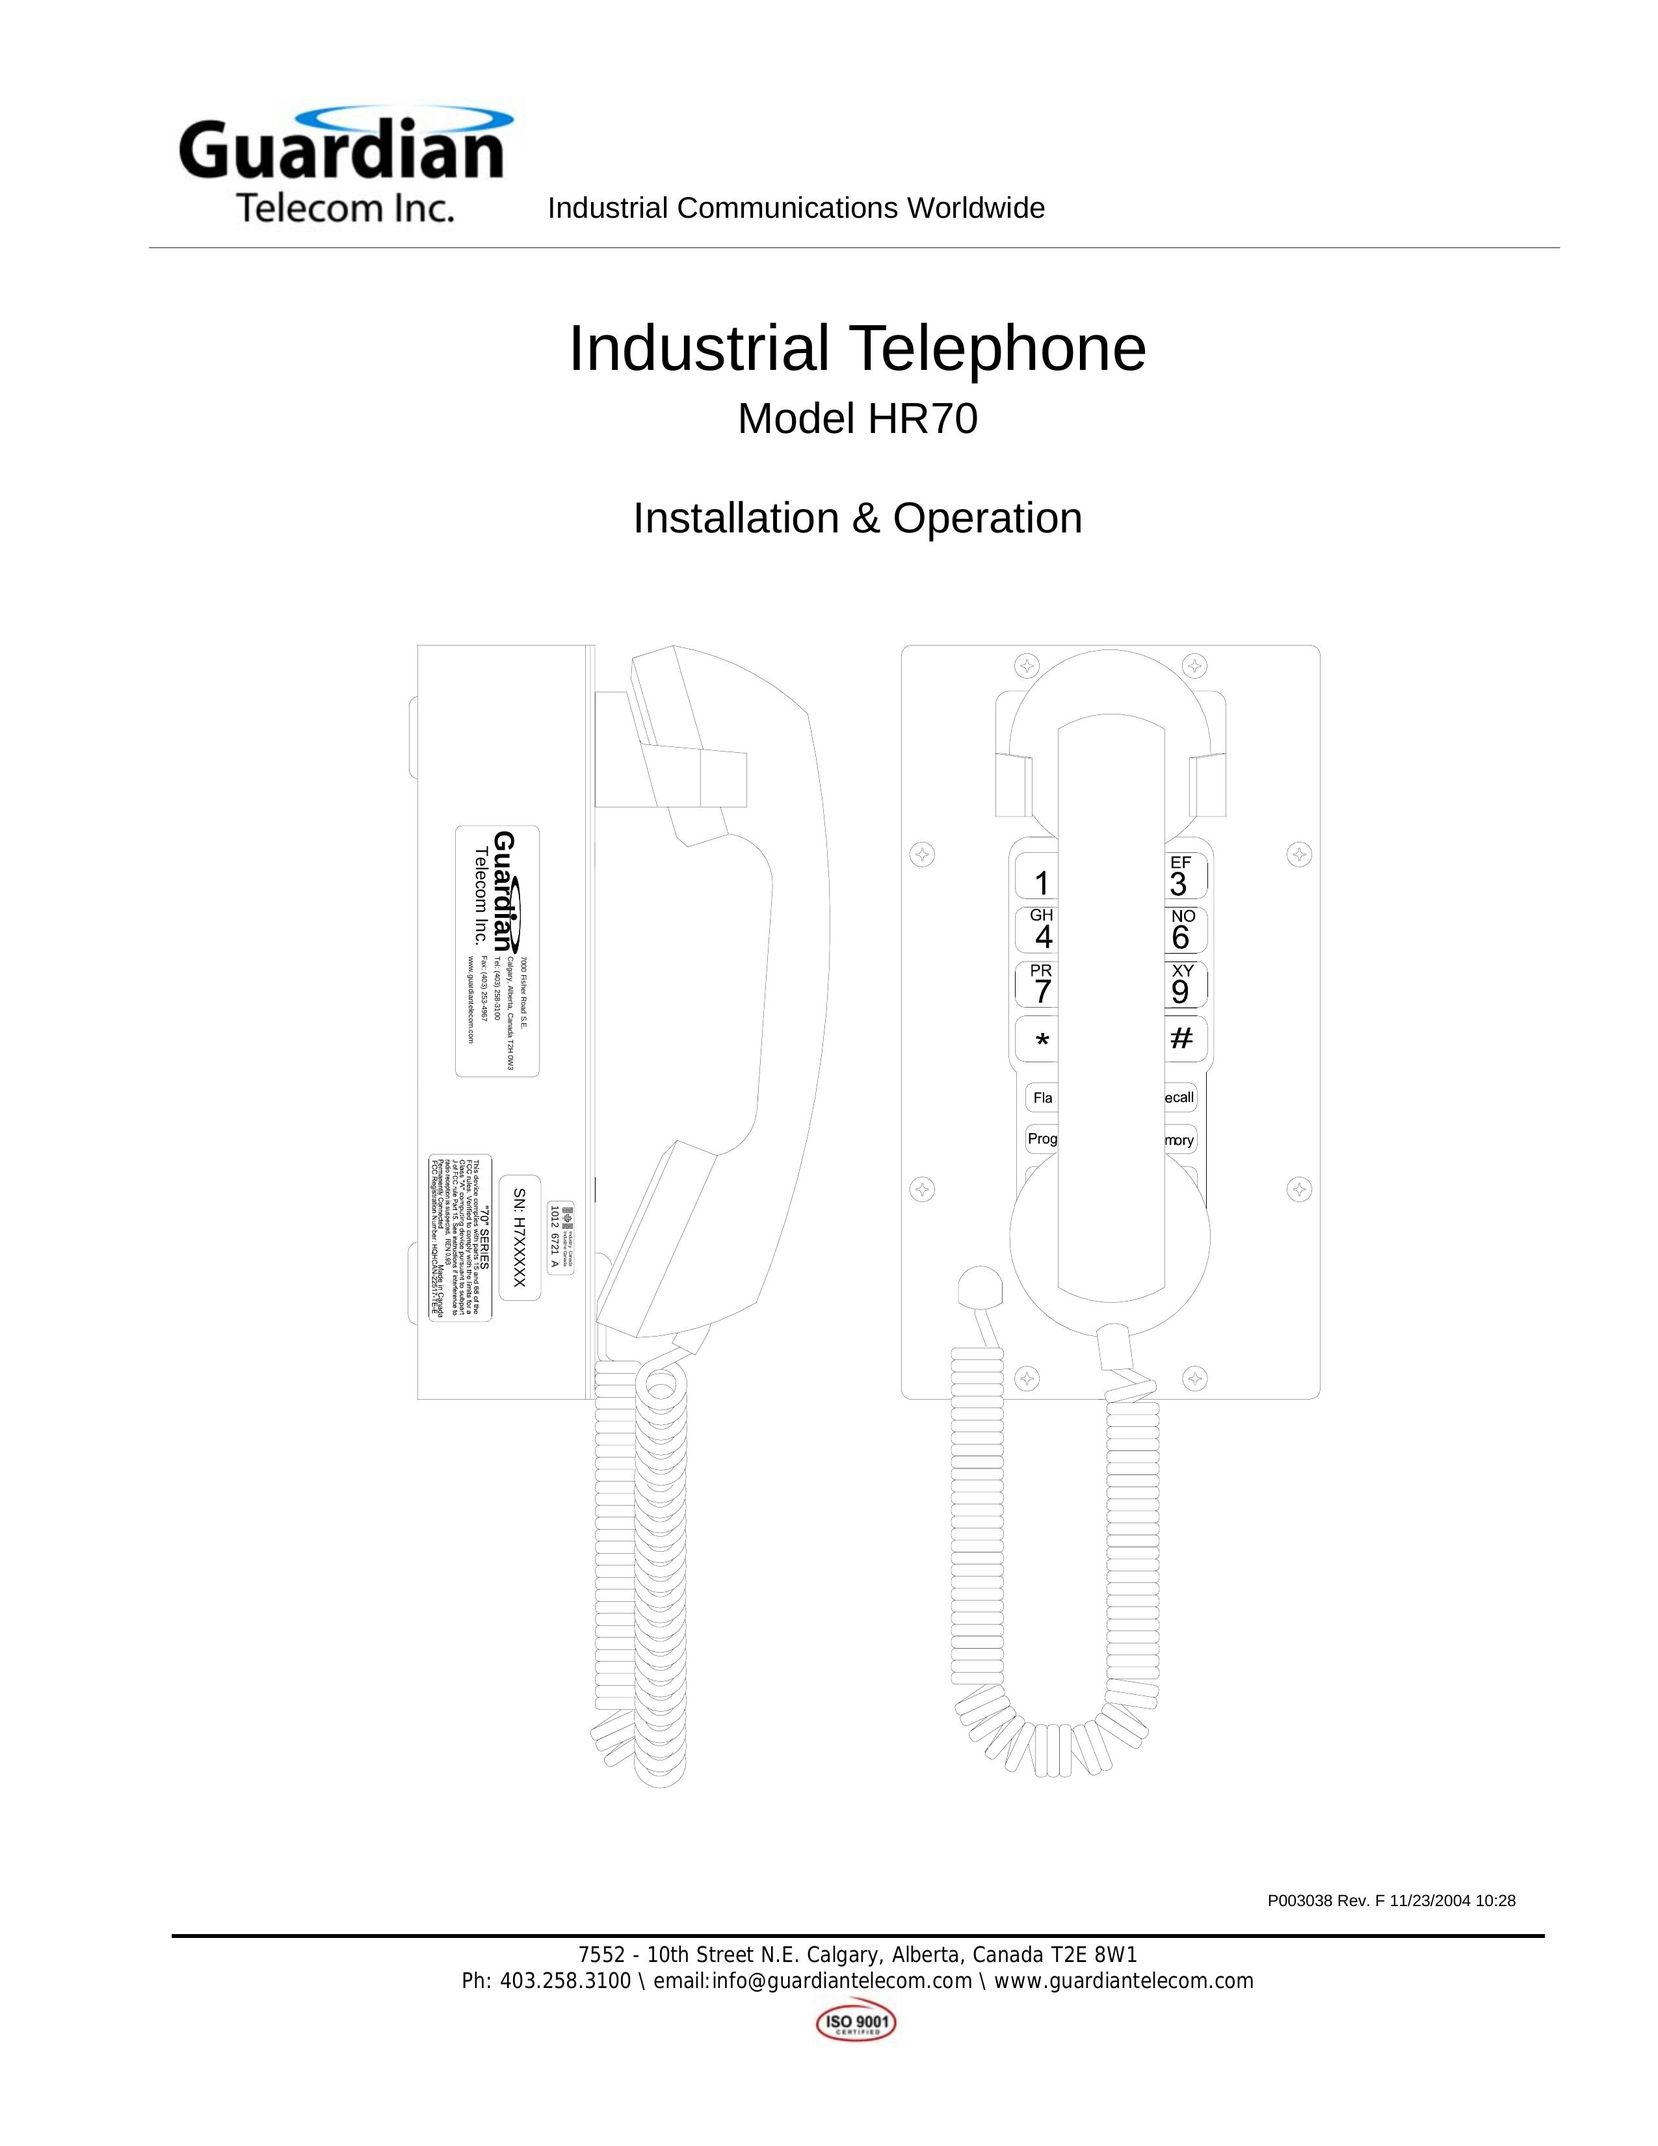 Guardian Technologies HR70 Telephone User Manual